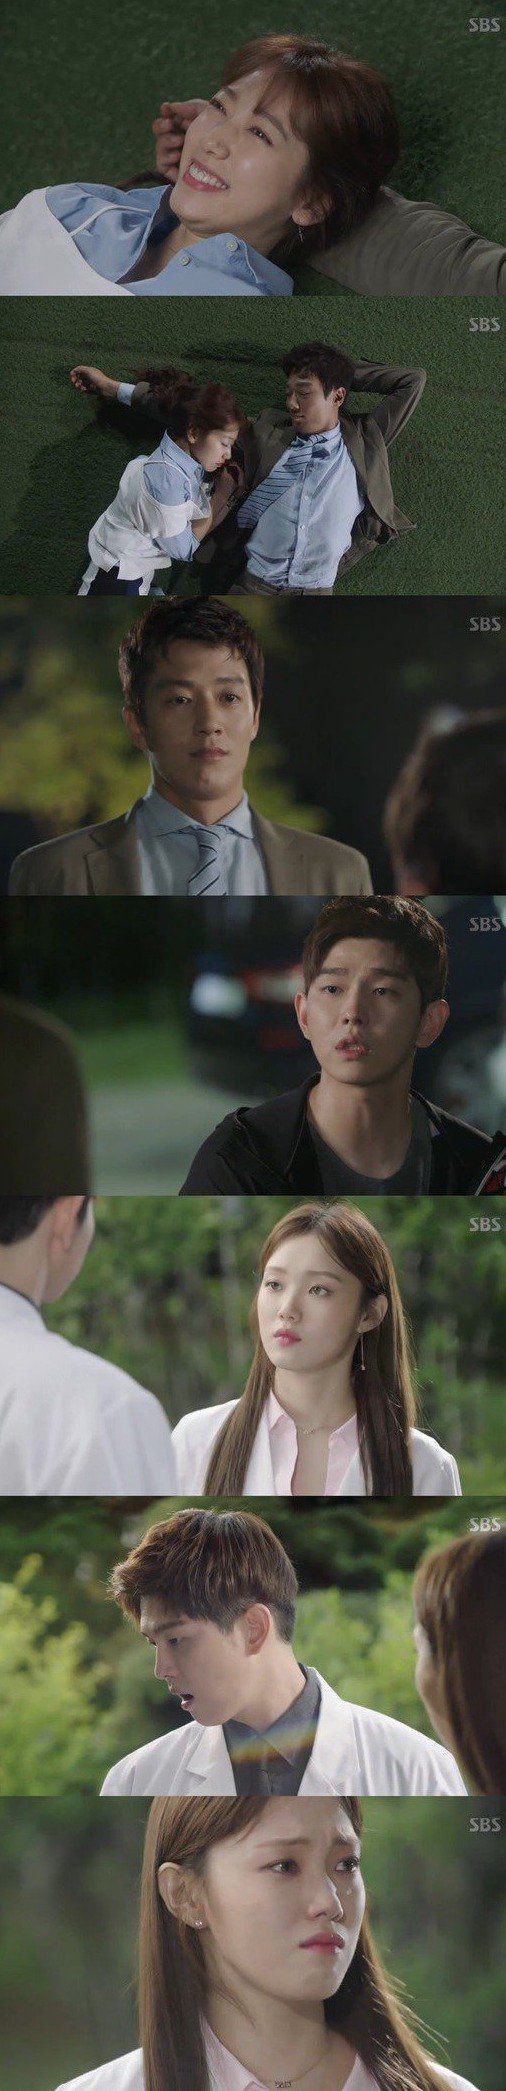 episode 9 captures for the Korean drama 'Doctors'